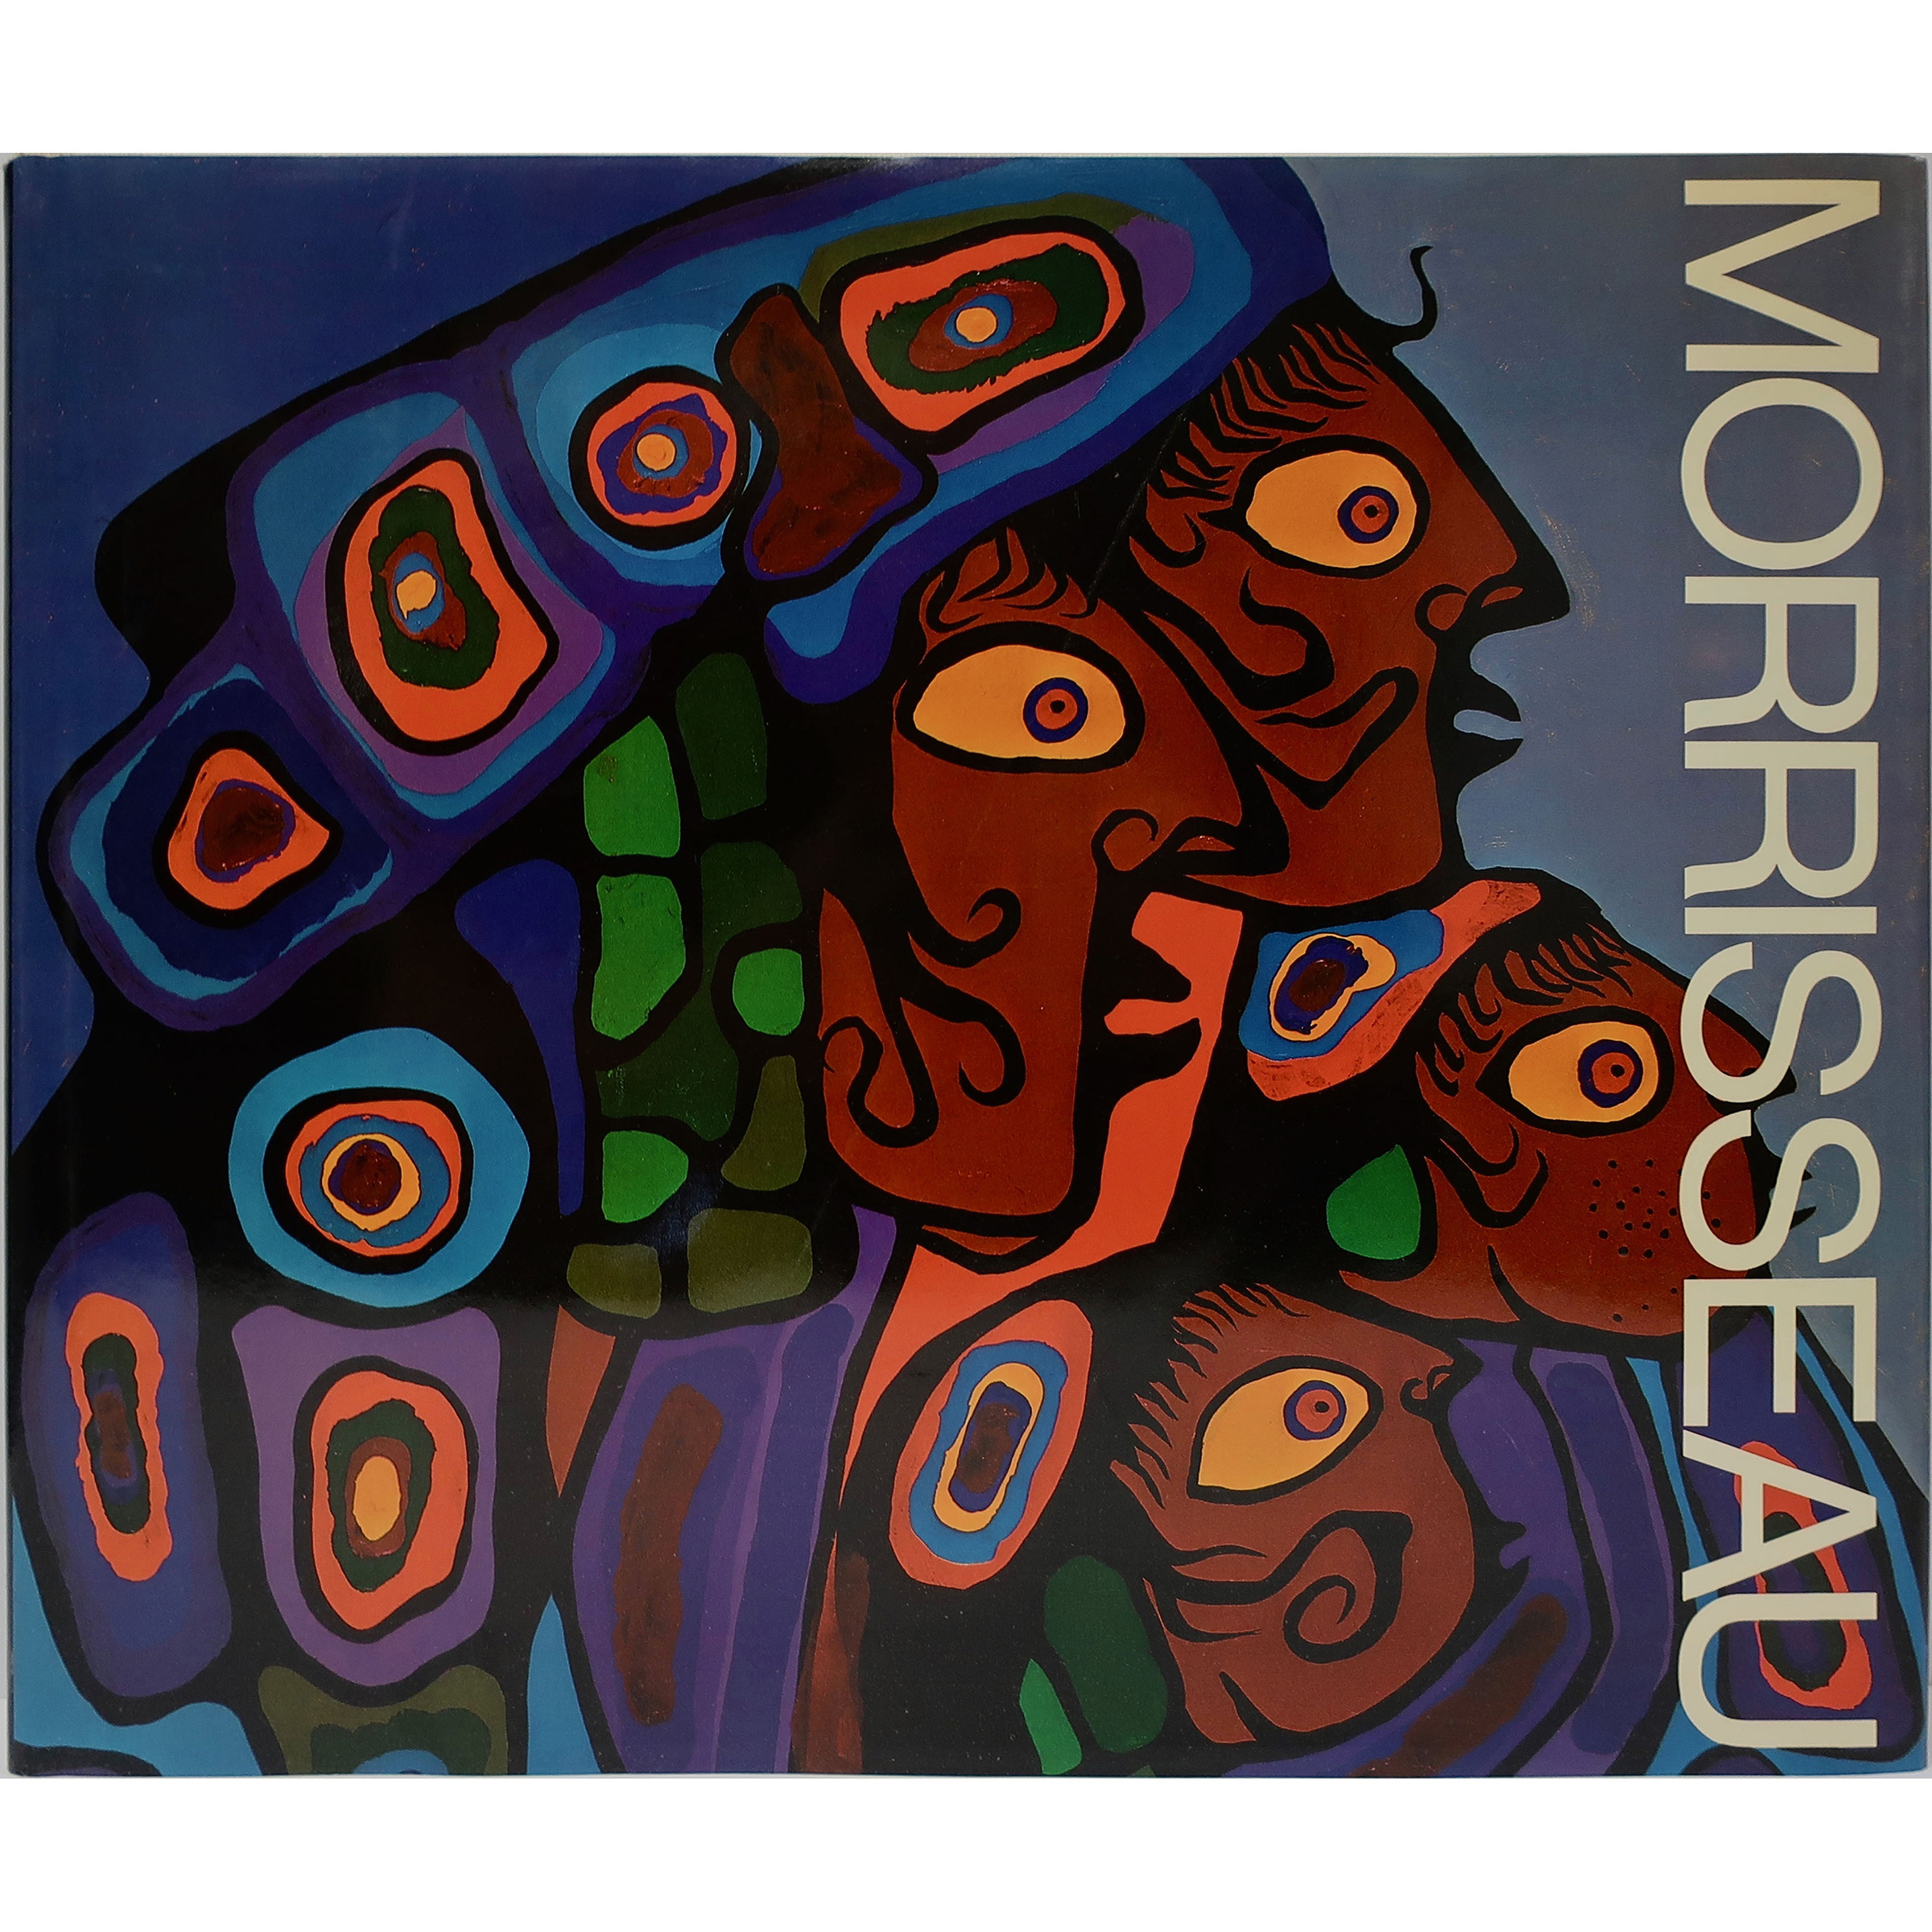 NORVAL MORRISSEAU (INDIGENOUS, 1931-2007) 